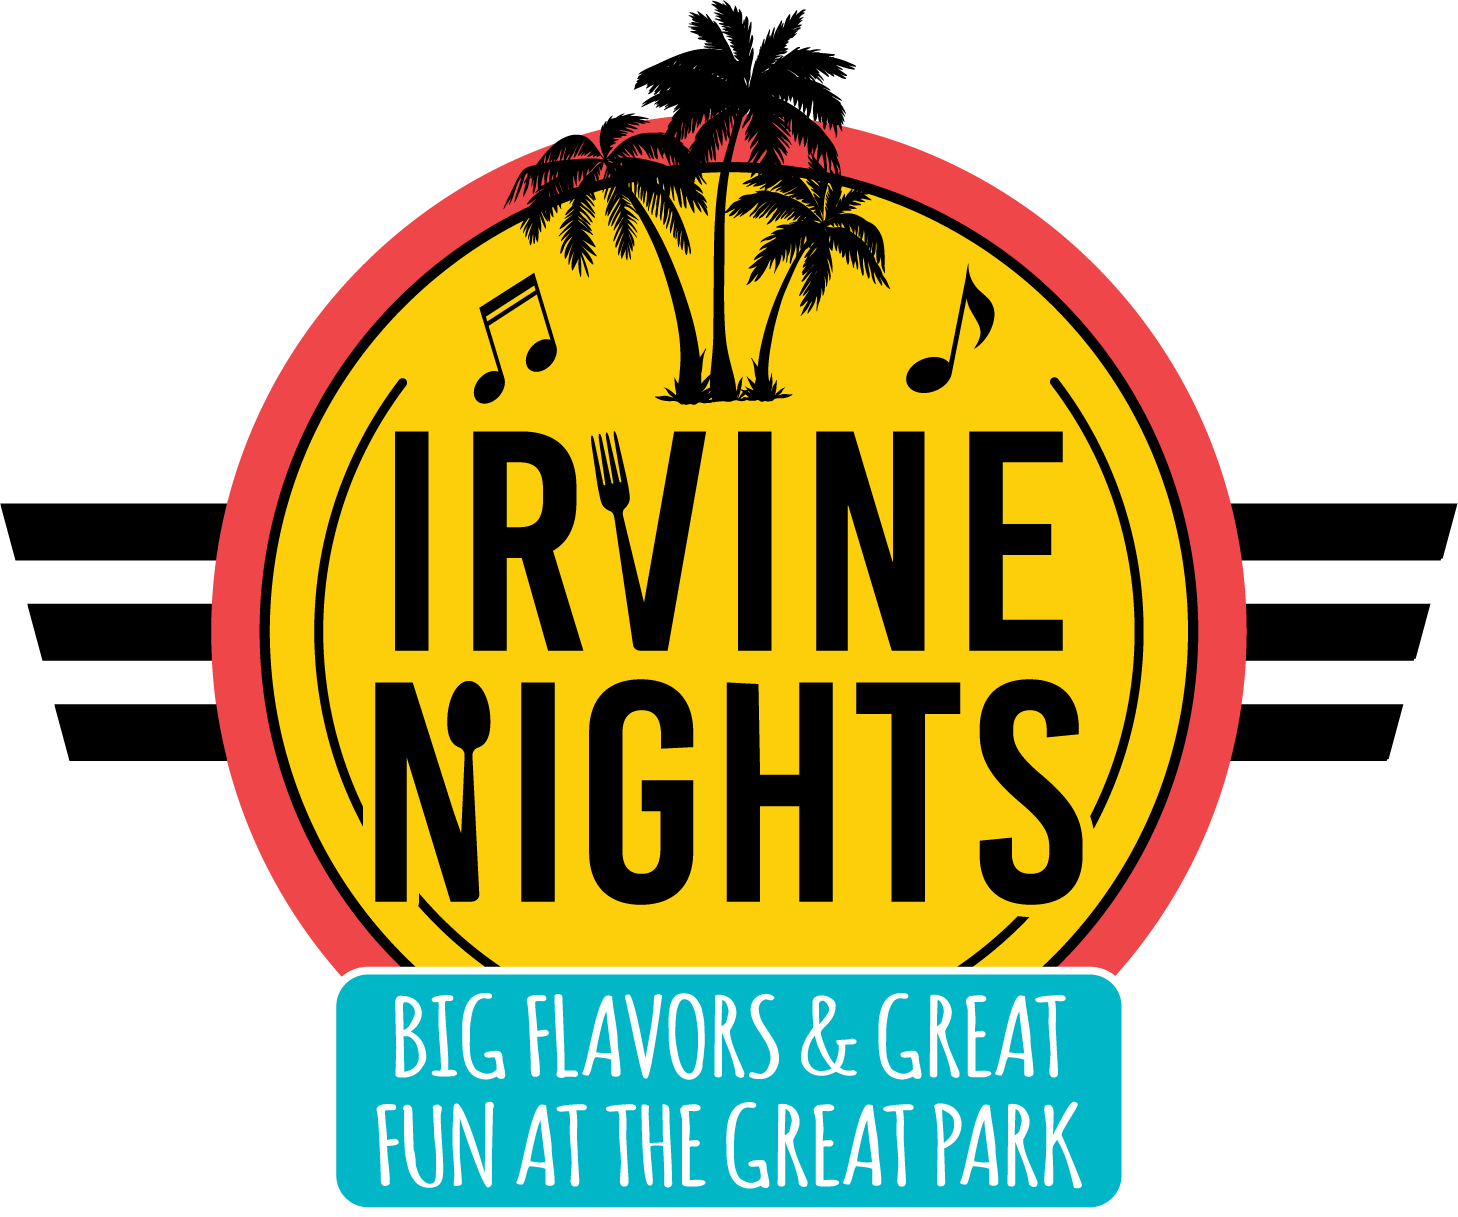 Irvine Nights logo